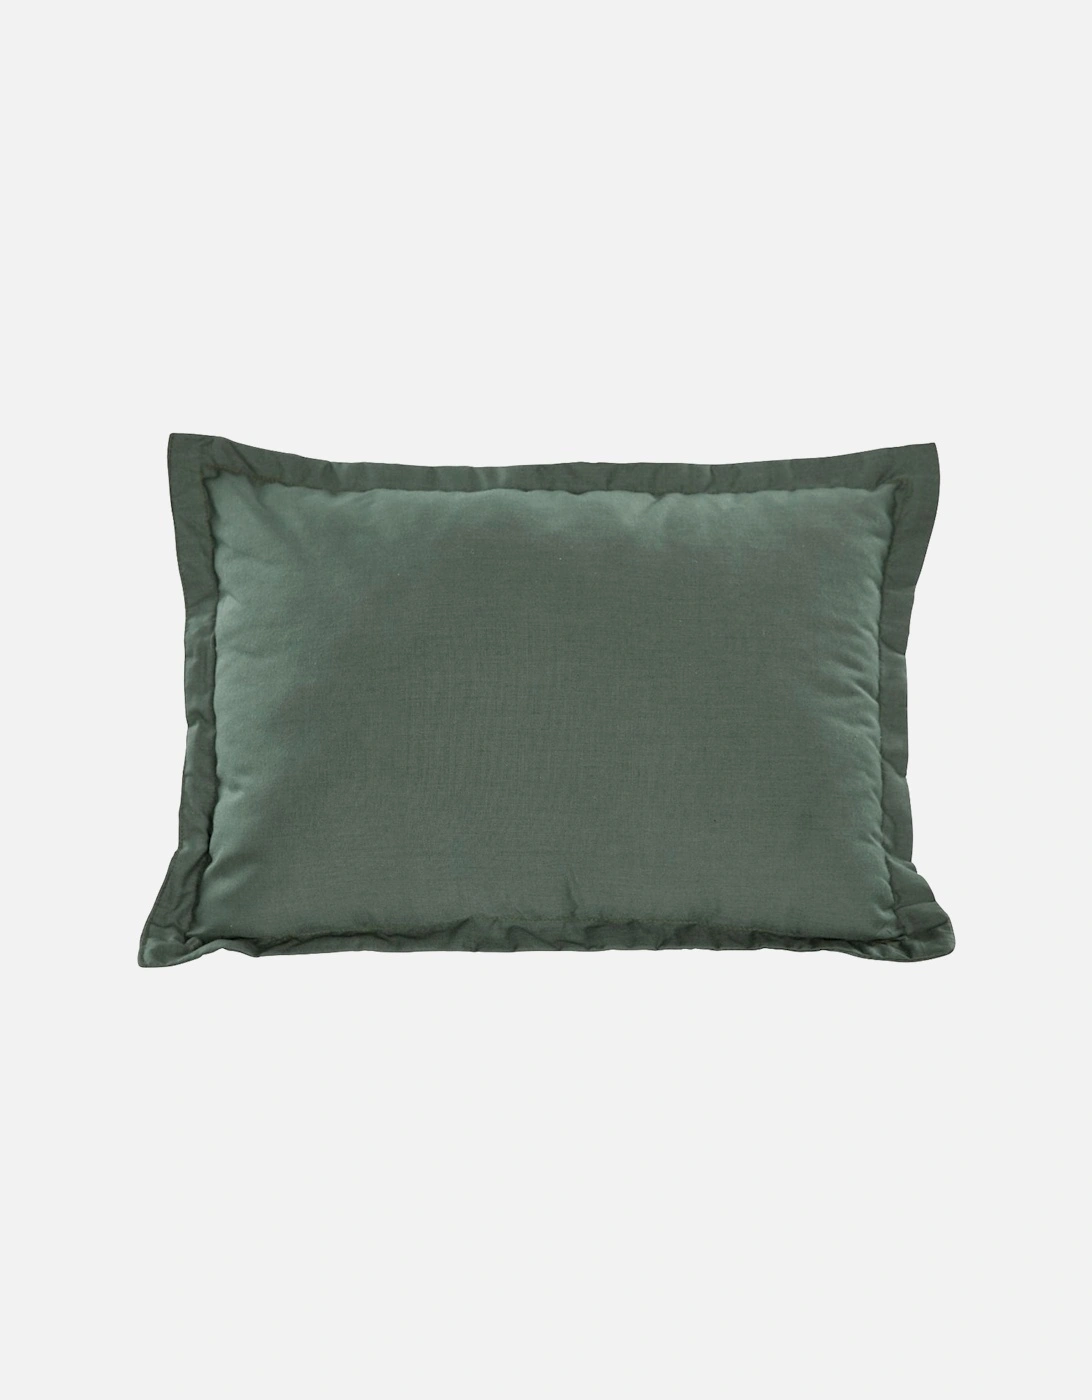 Packaway Soft Compact Travel Pillow